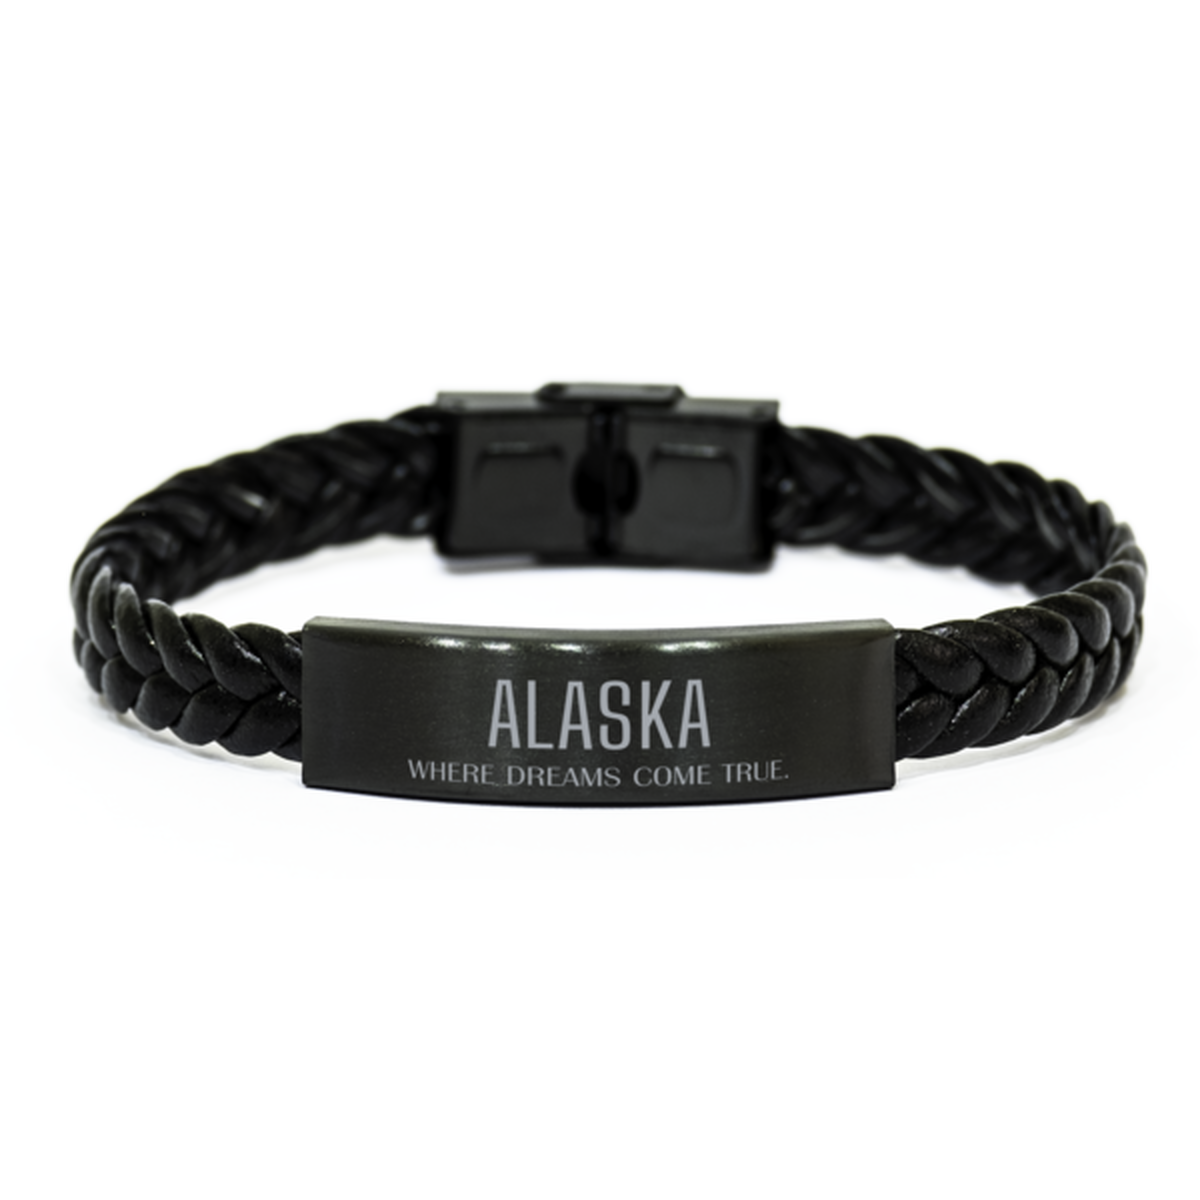 Love Alaska State Braided Leather Bracelet, Alaska Where dreams come true, Birthday Inspirational Gifts For Alaska Men, Women, Friends